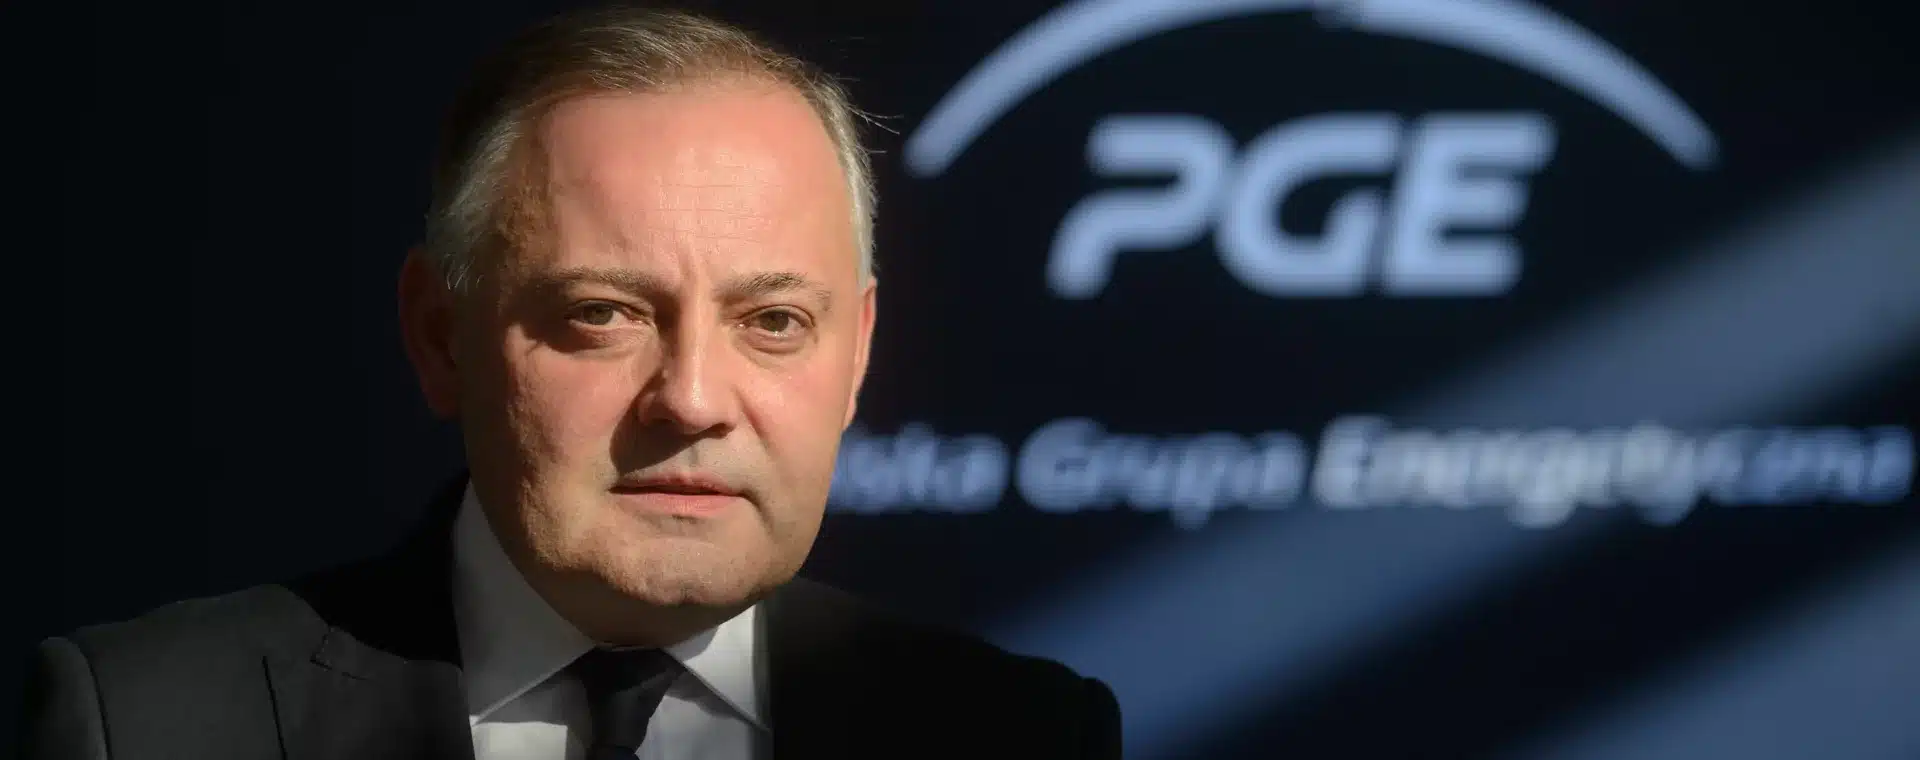 Wojciech Dąbrowski, CEO of PGE Polish Energy Group